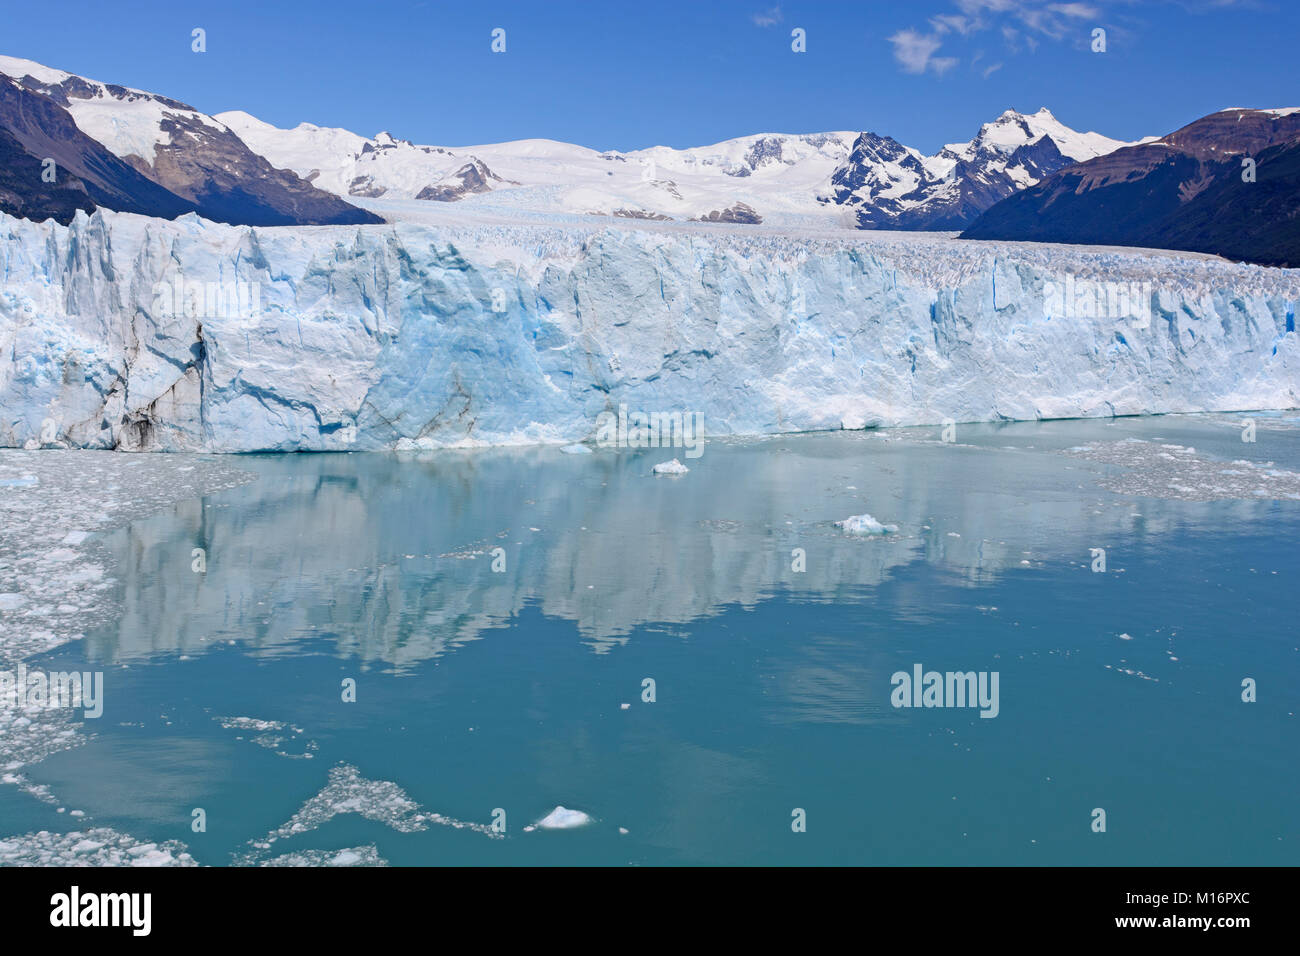 Calm waters below the Perito Moreno Glacier Los Glaciares National Park in the Patagonian Andes of Argentina Stock Photo